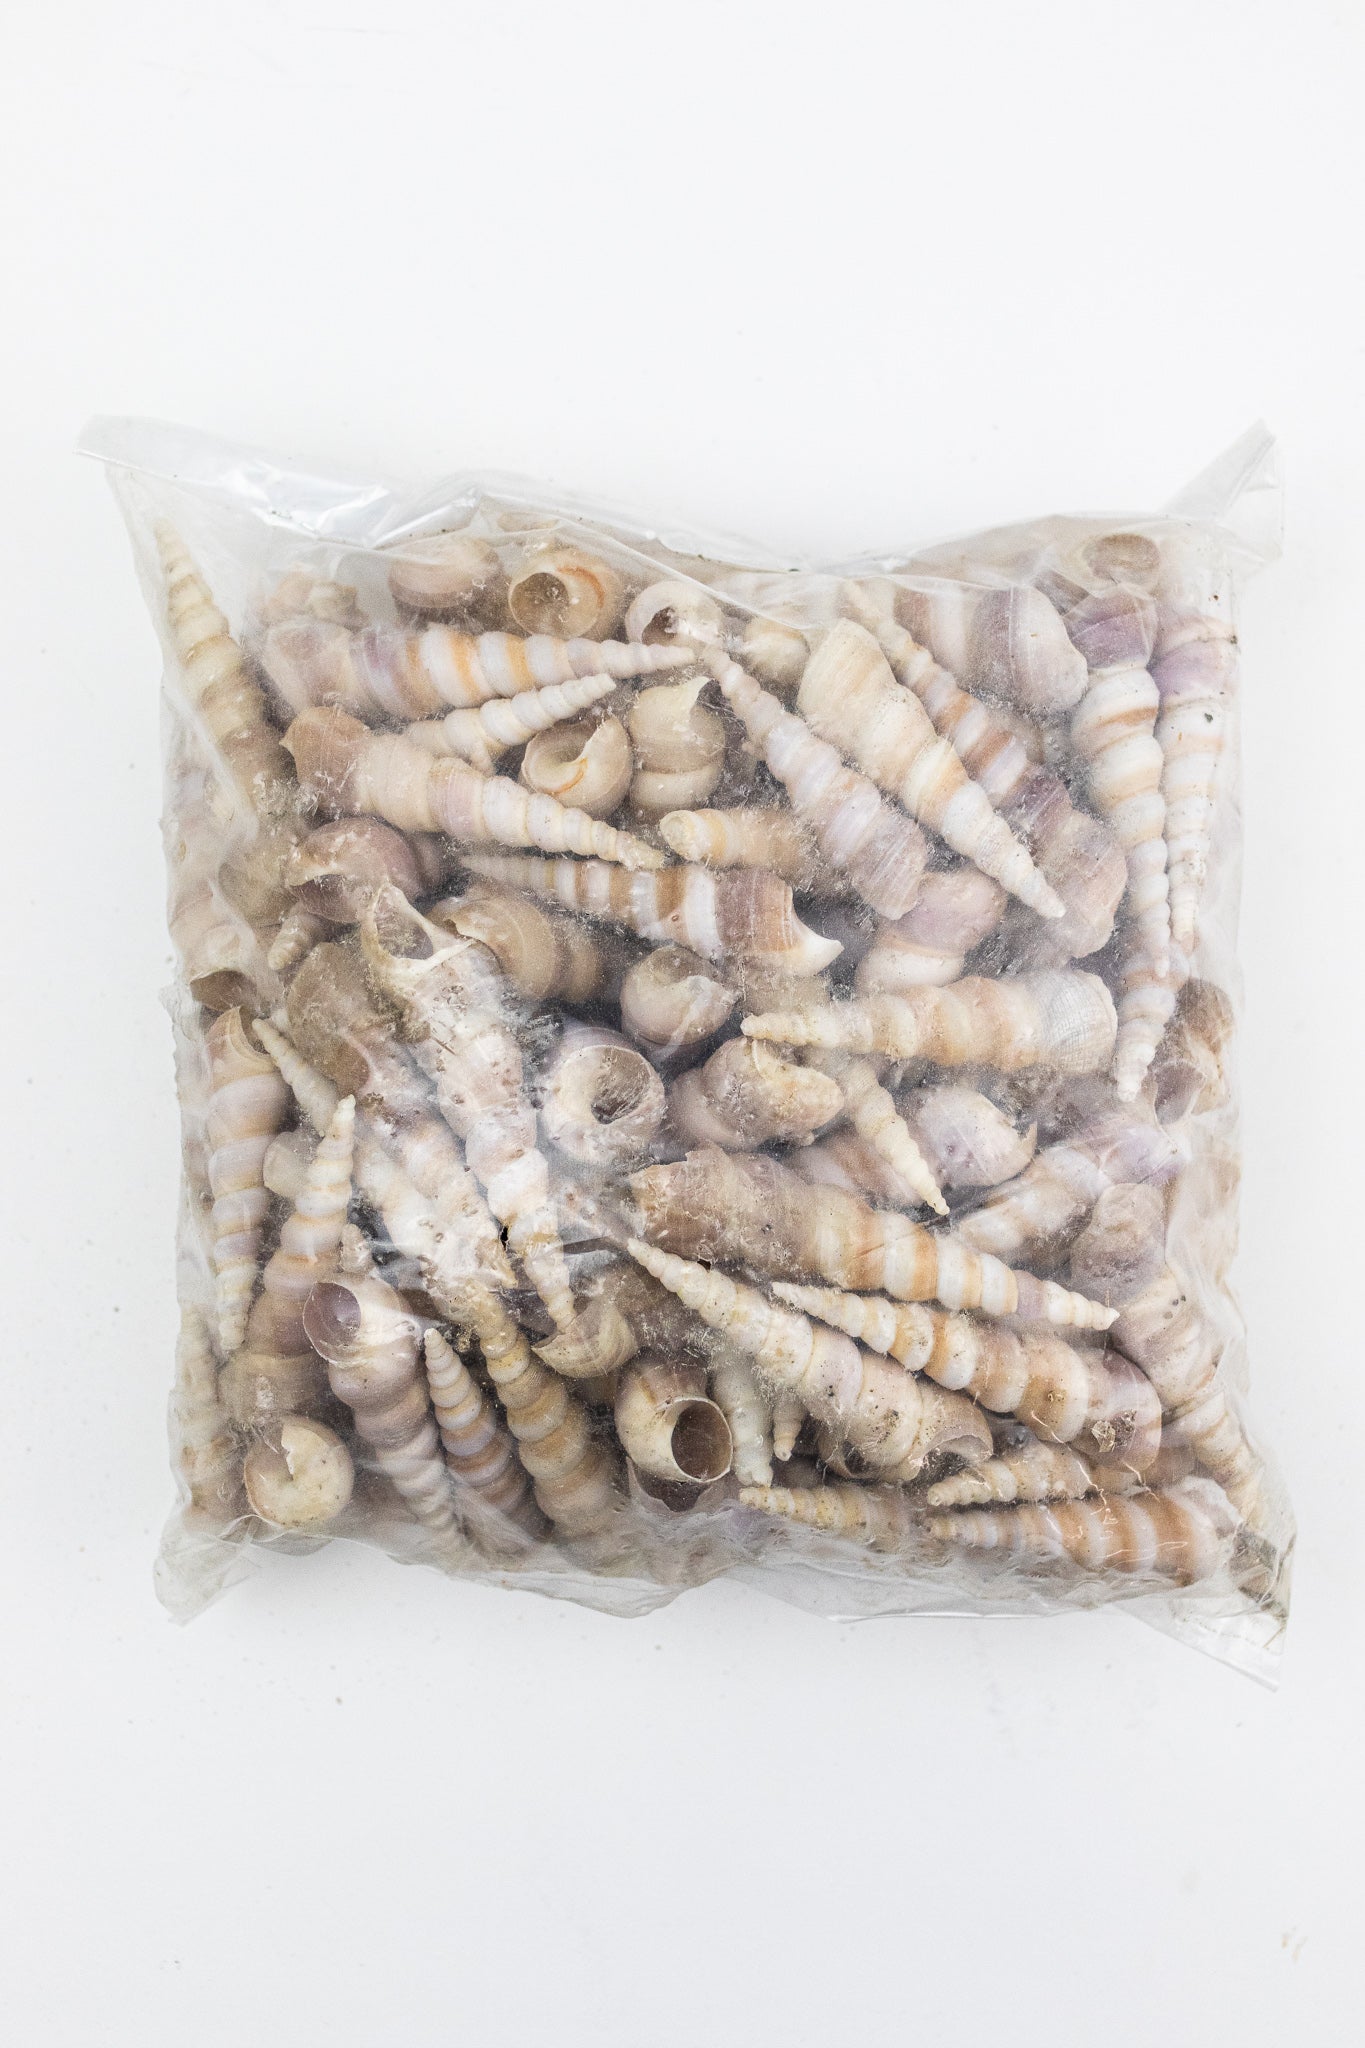 1 kg Bag of Whole Terebra Shells